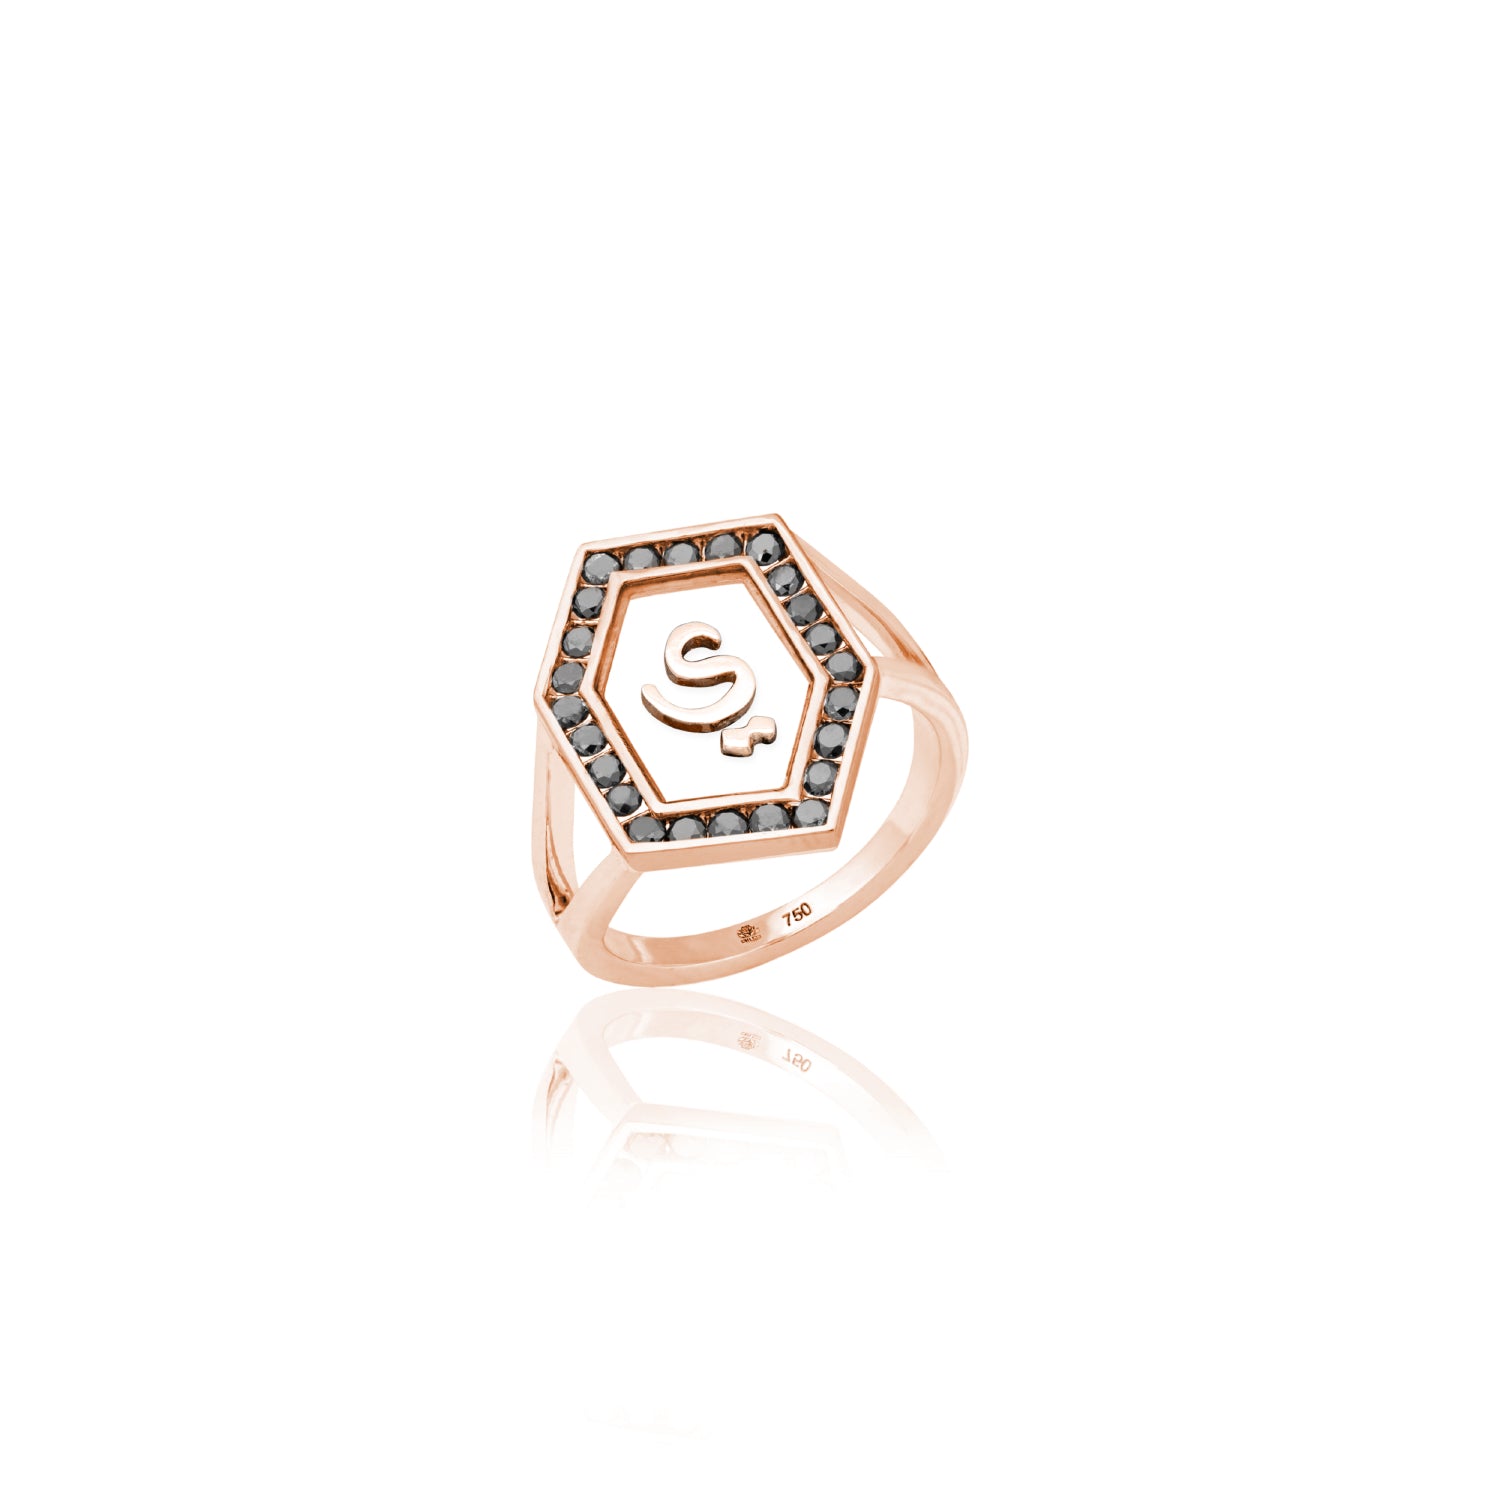 Qamoos 1.0 Letter ي Black Diamond Ring in Rose Gold